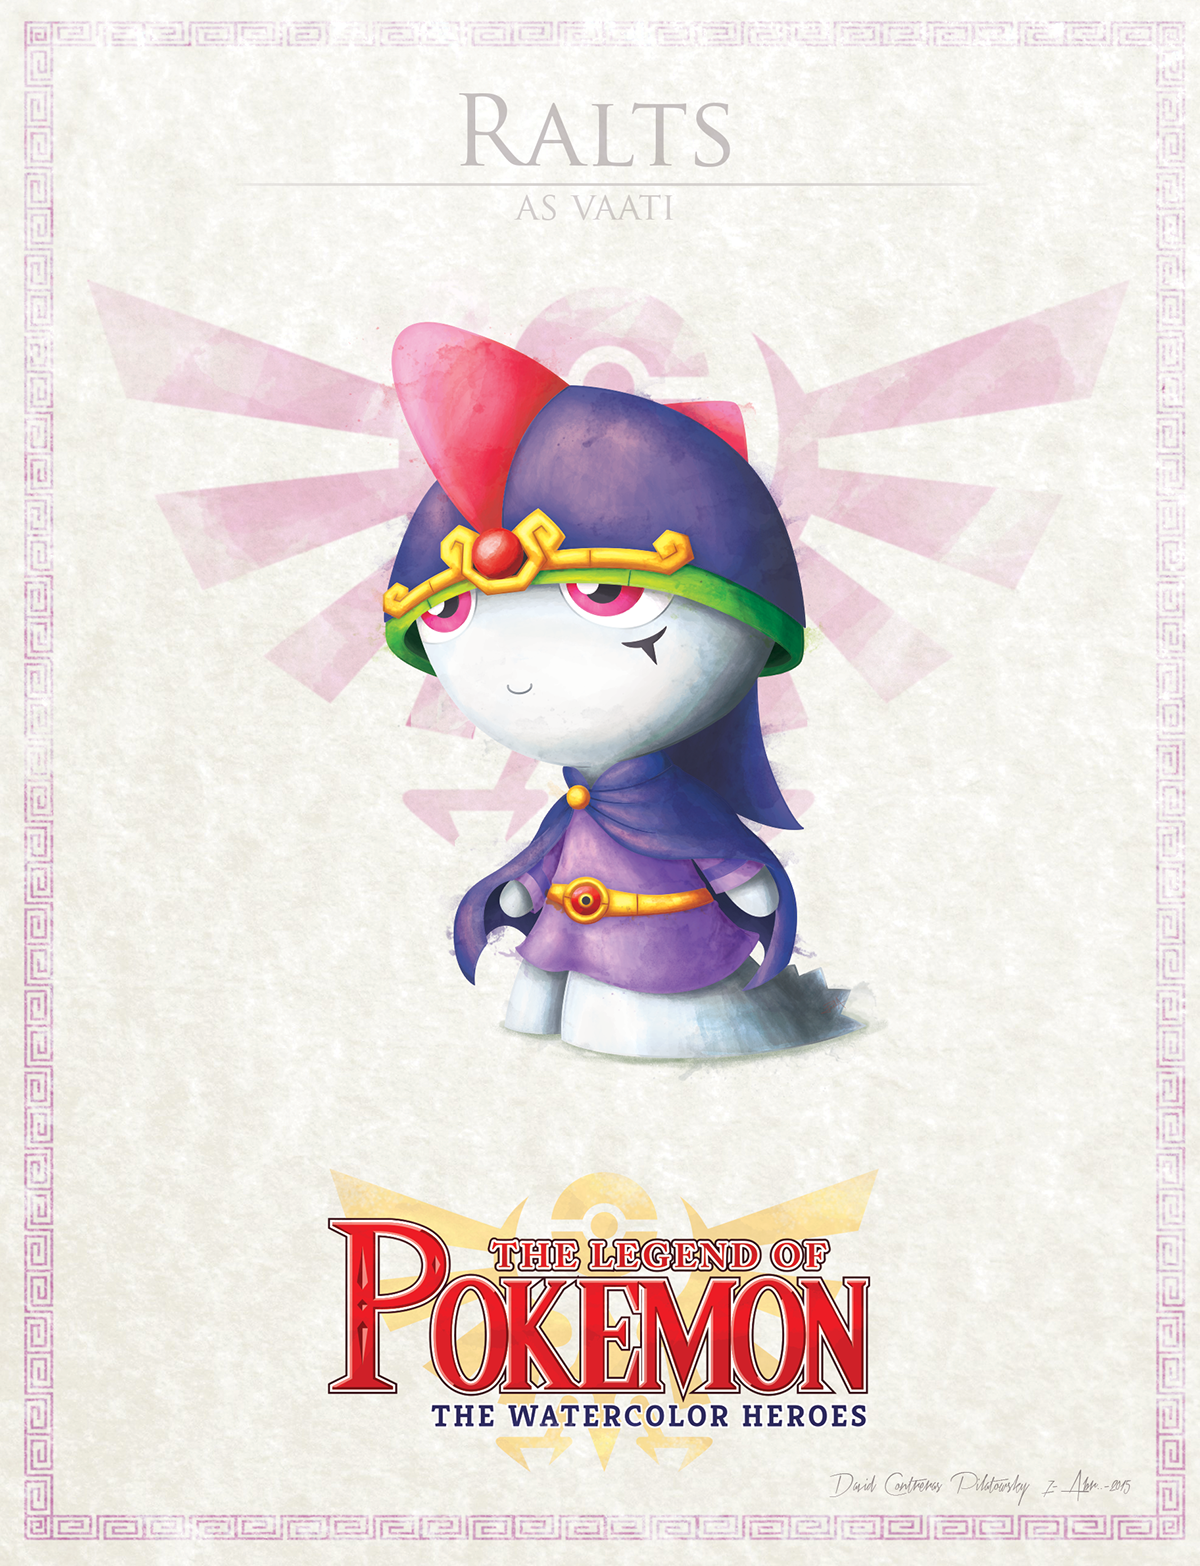 Pokemon zelda legend of pokemon meowth Cubone Sandshrew Ralts slowbro vaati zant ghirahim Ganondorf Agahnim